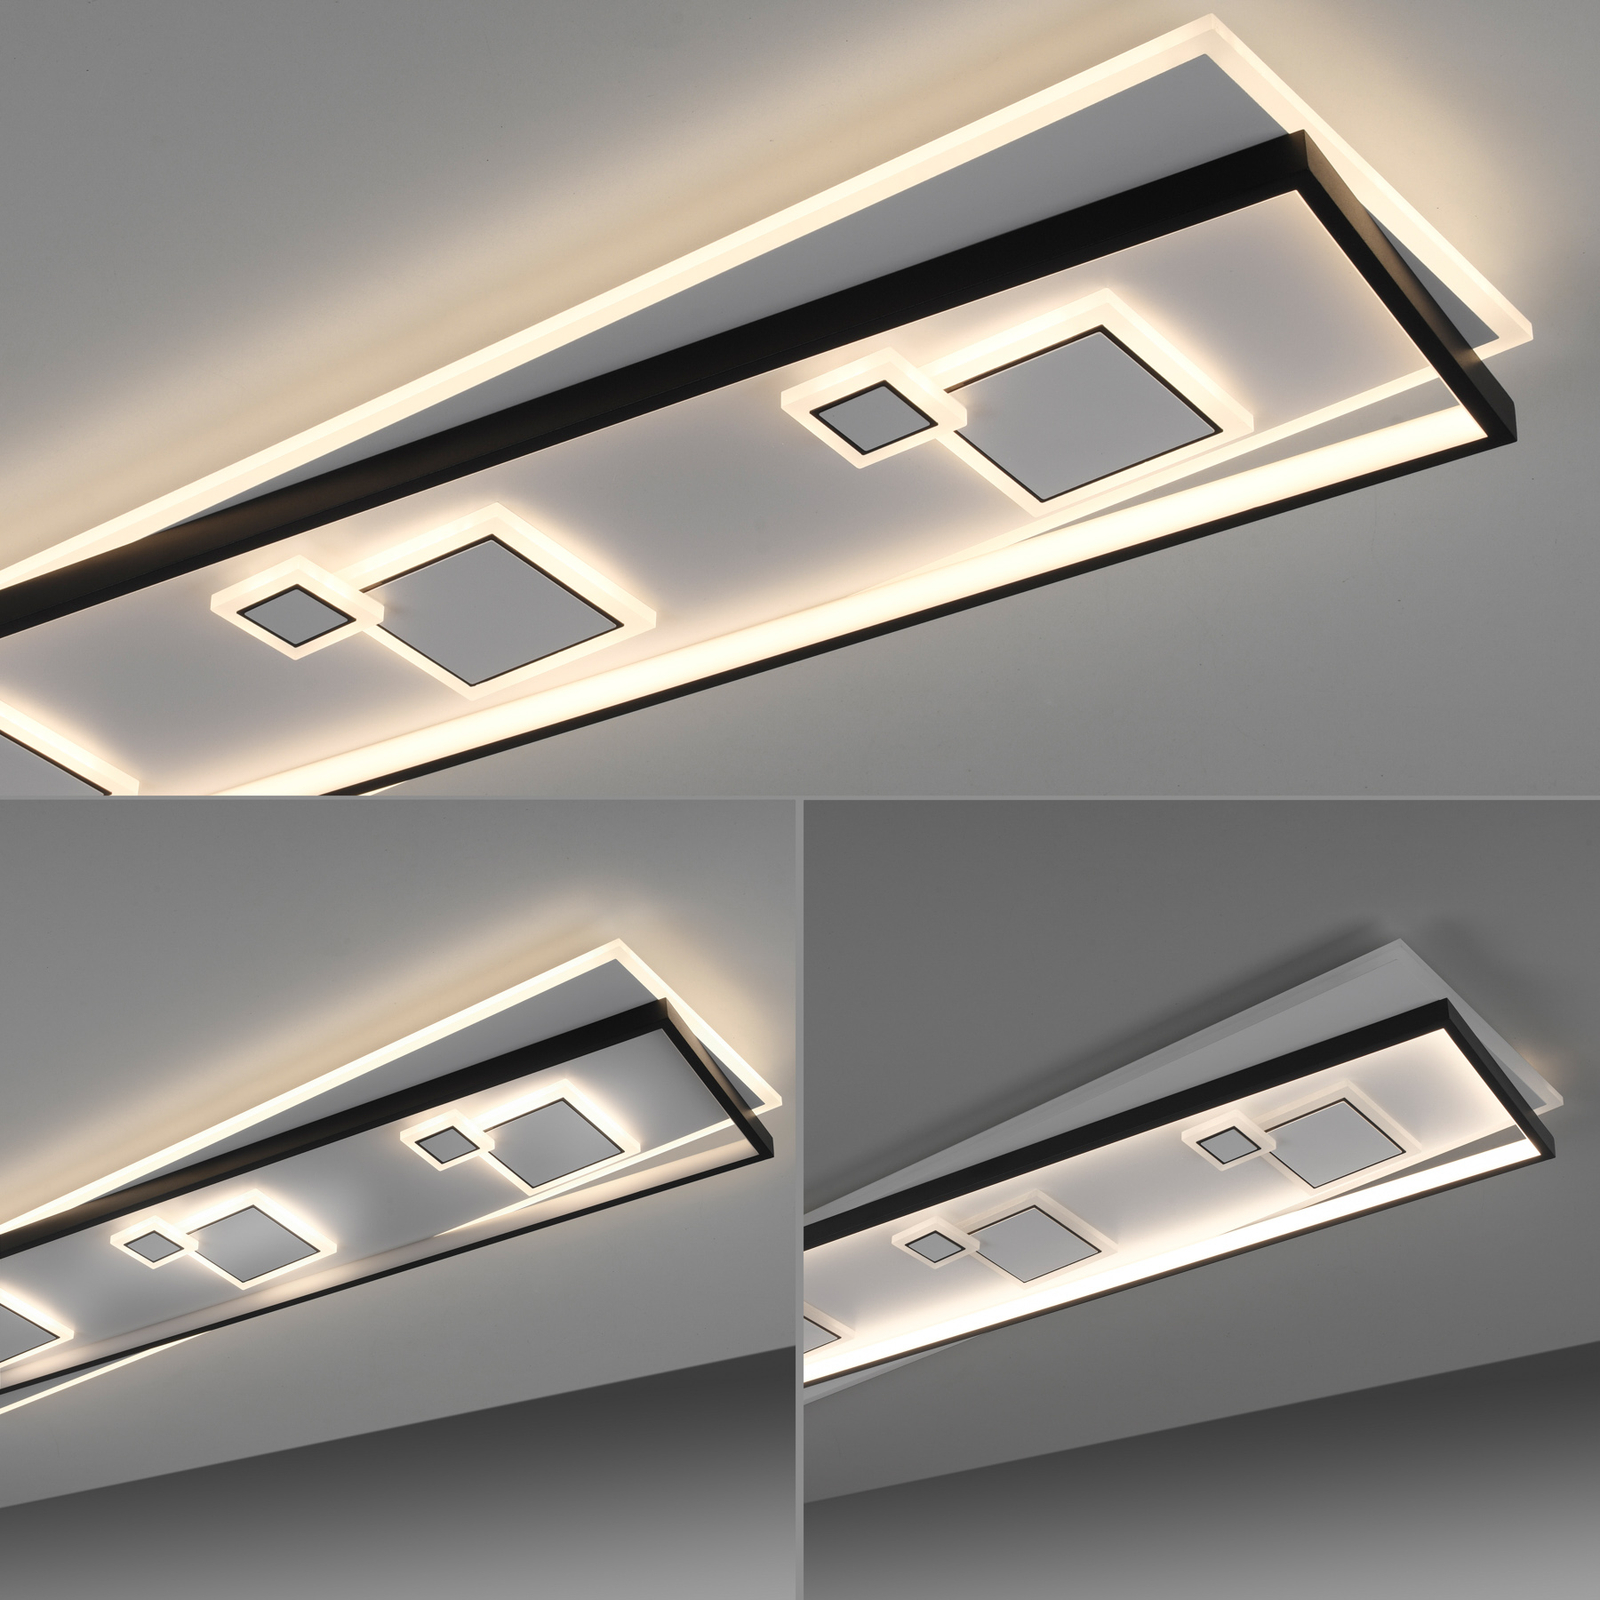 Mailak LED ceiling light, 97 cm long